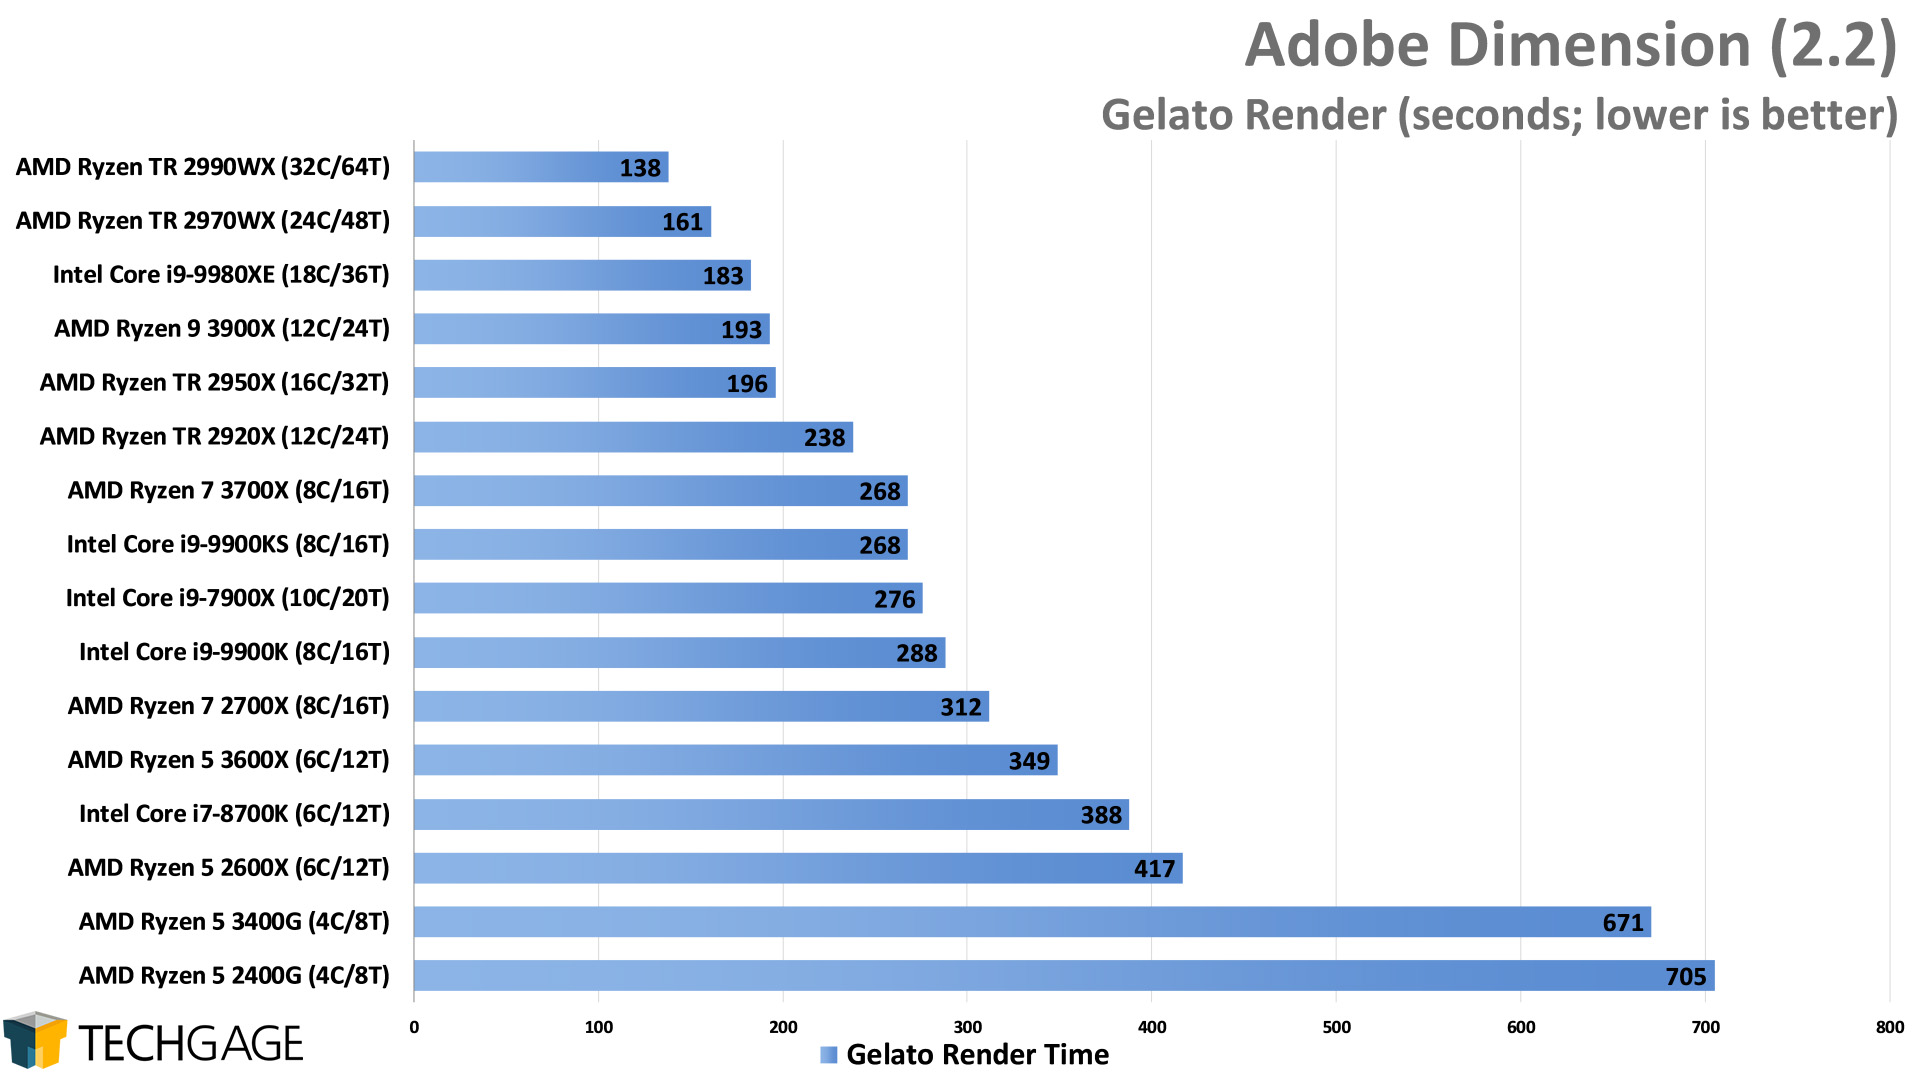 Adobe Dimension - Gelato Render Performance (Intel Core i9-9900KS)